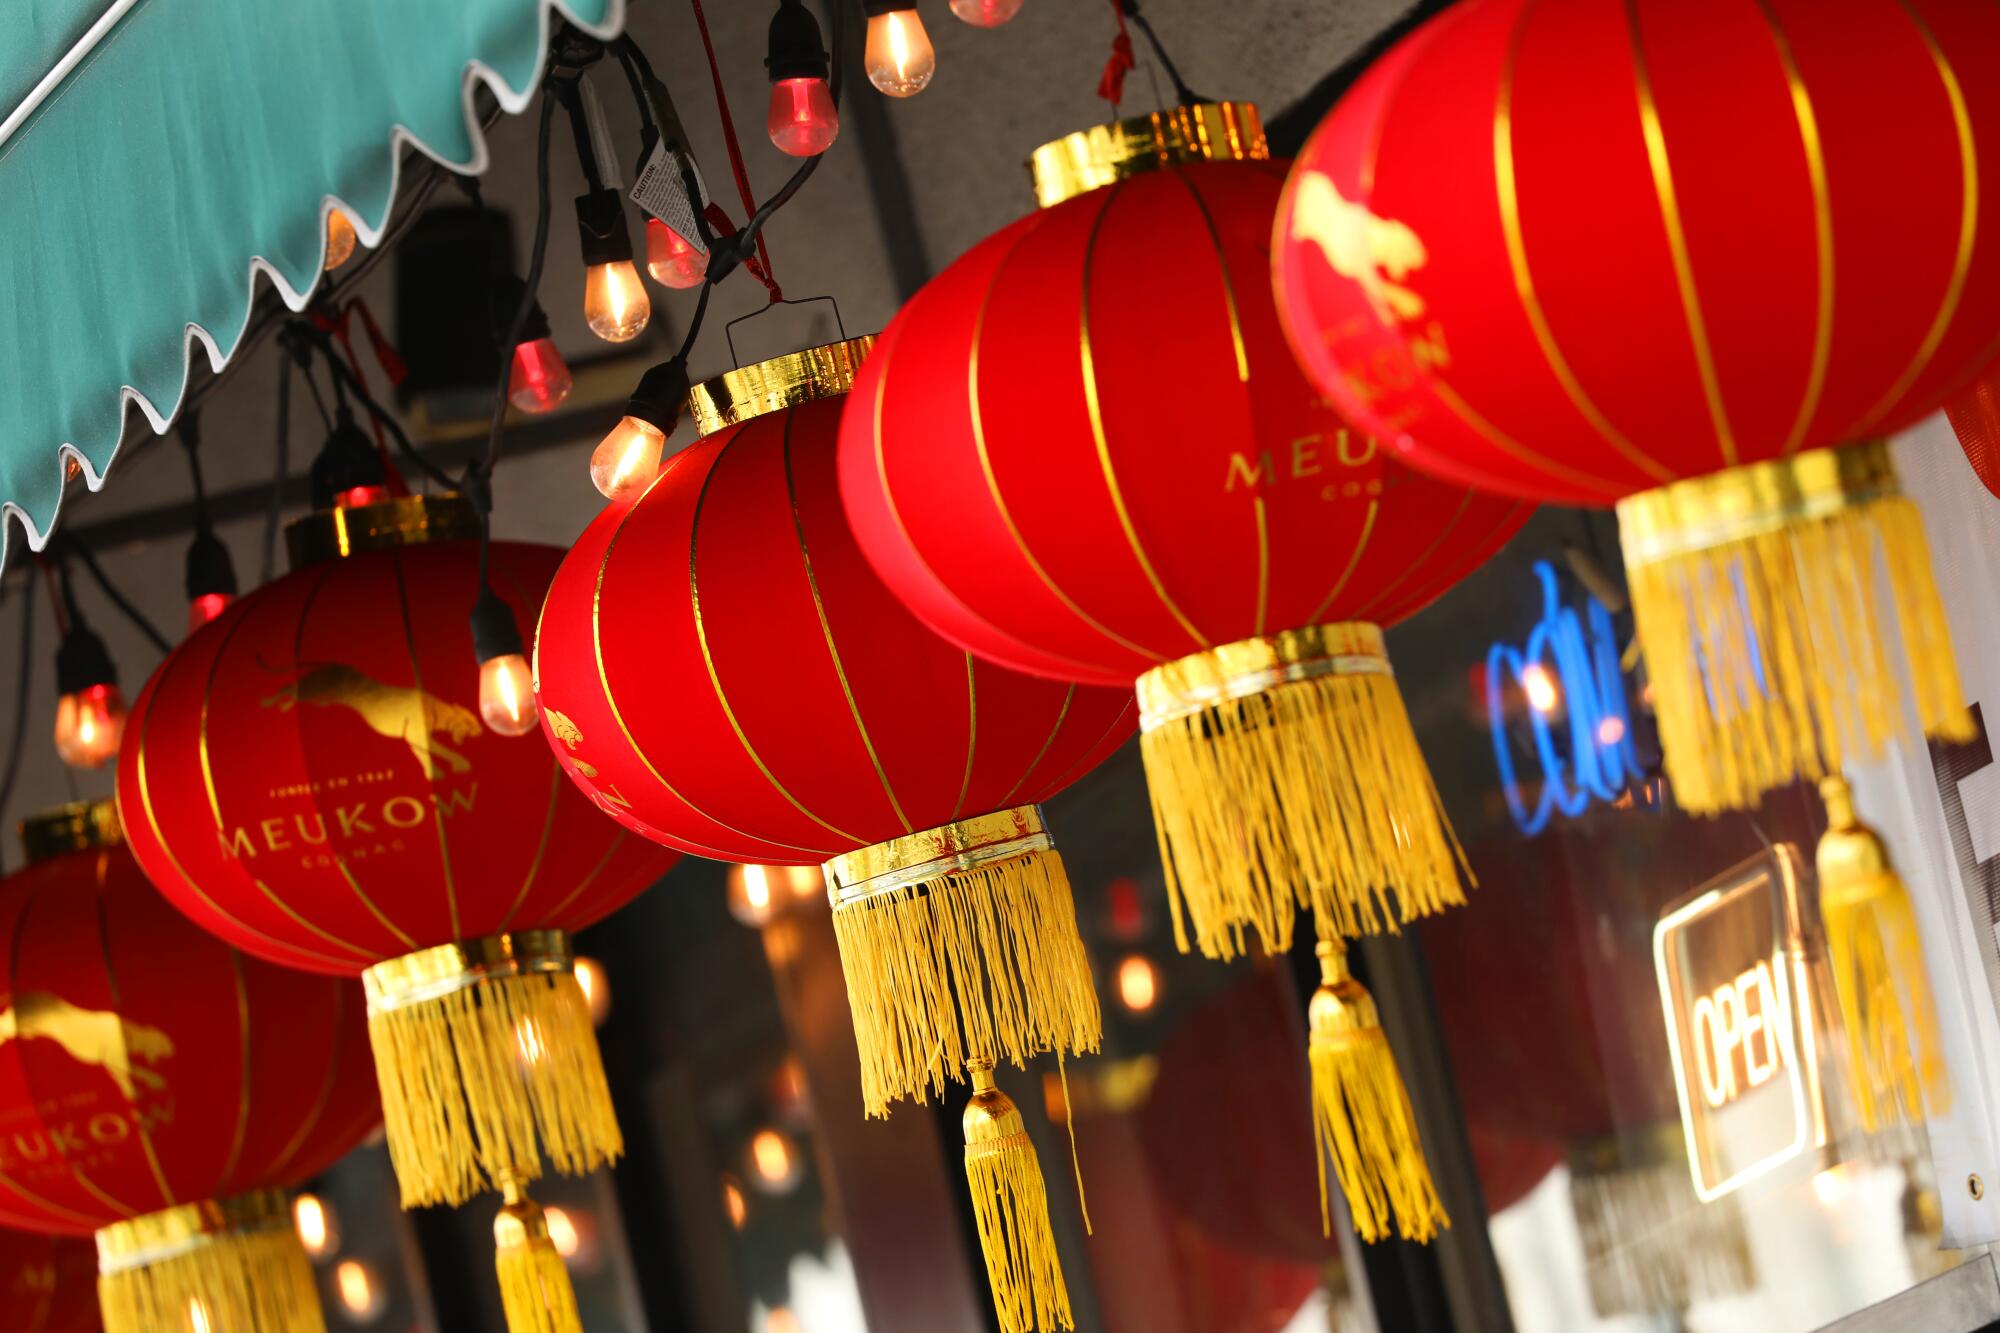 Lanterns hang across the entrance to King Com Tam restaurant.